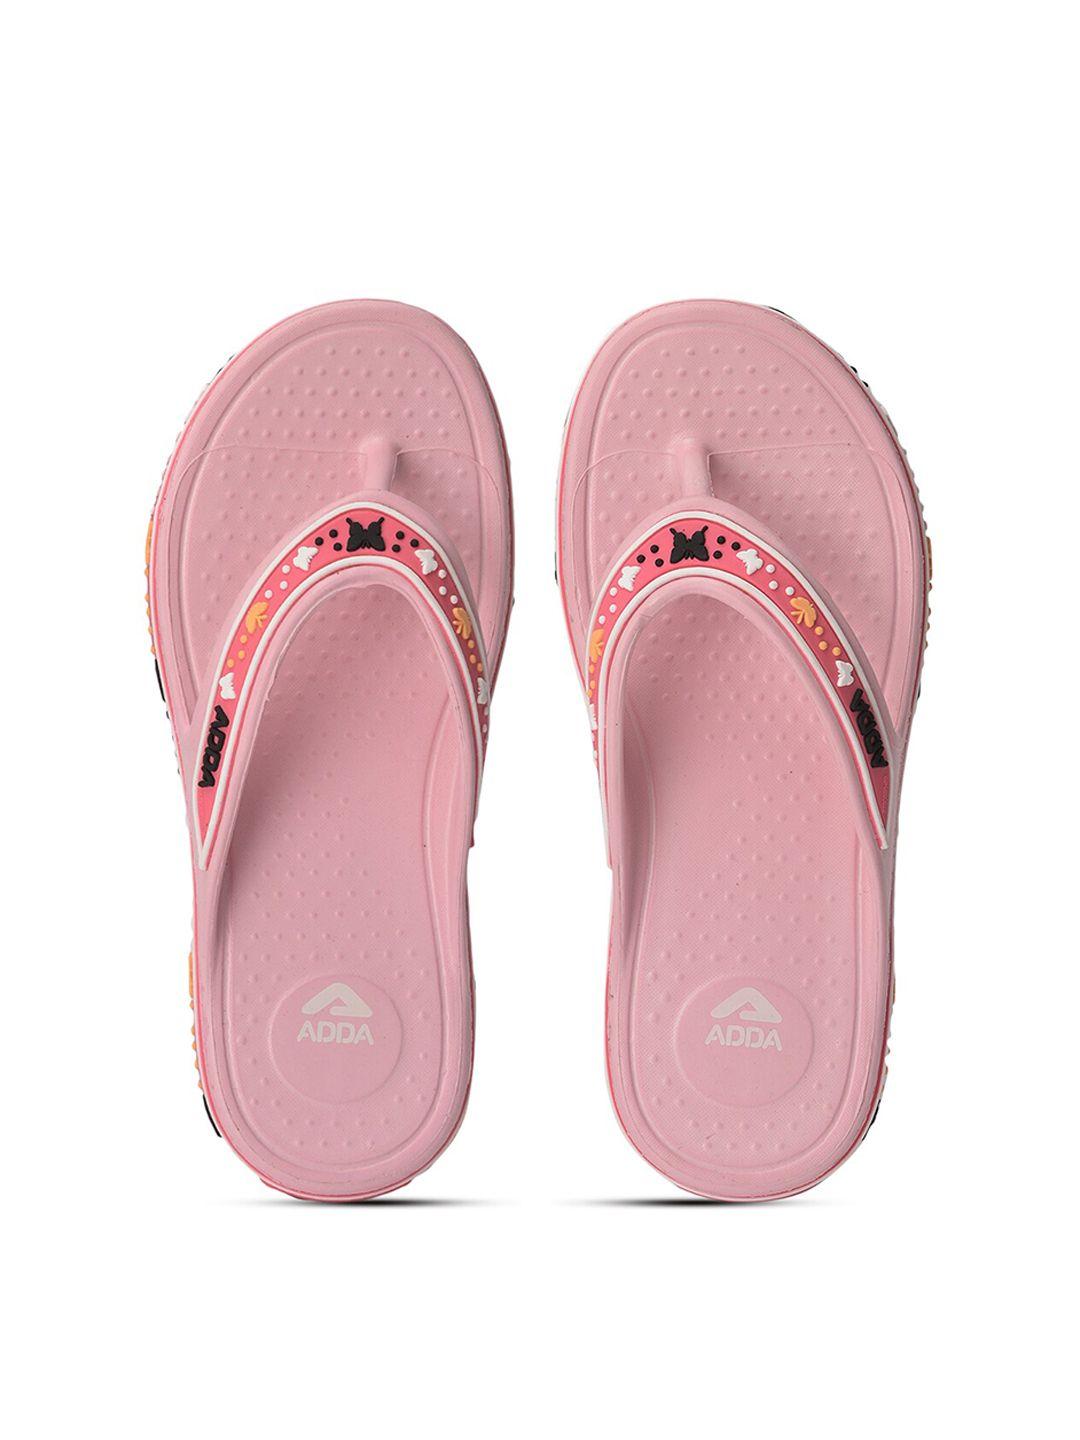 adda women pink & white rubber thong flip-flops